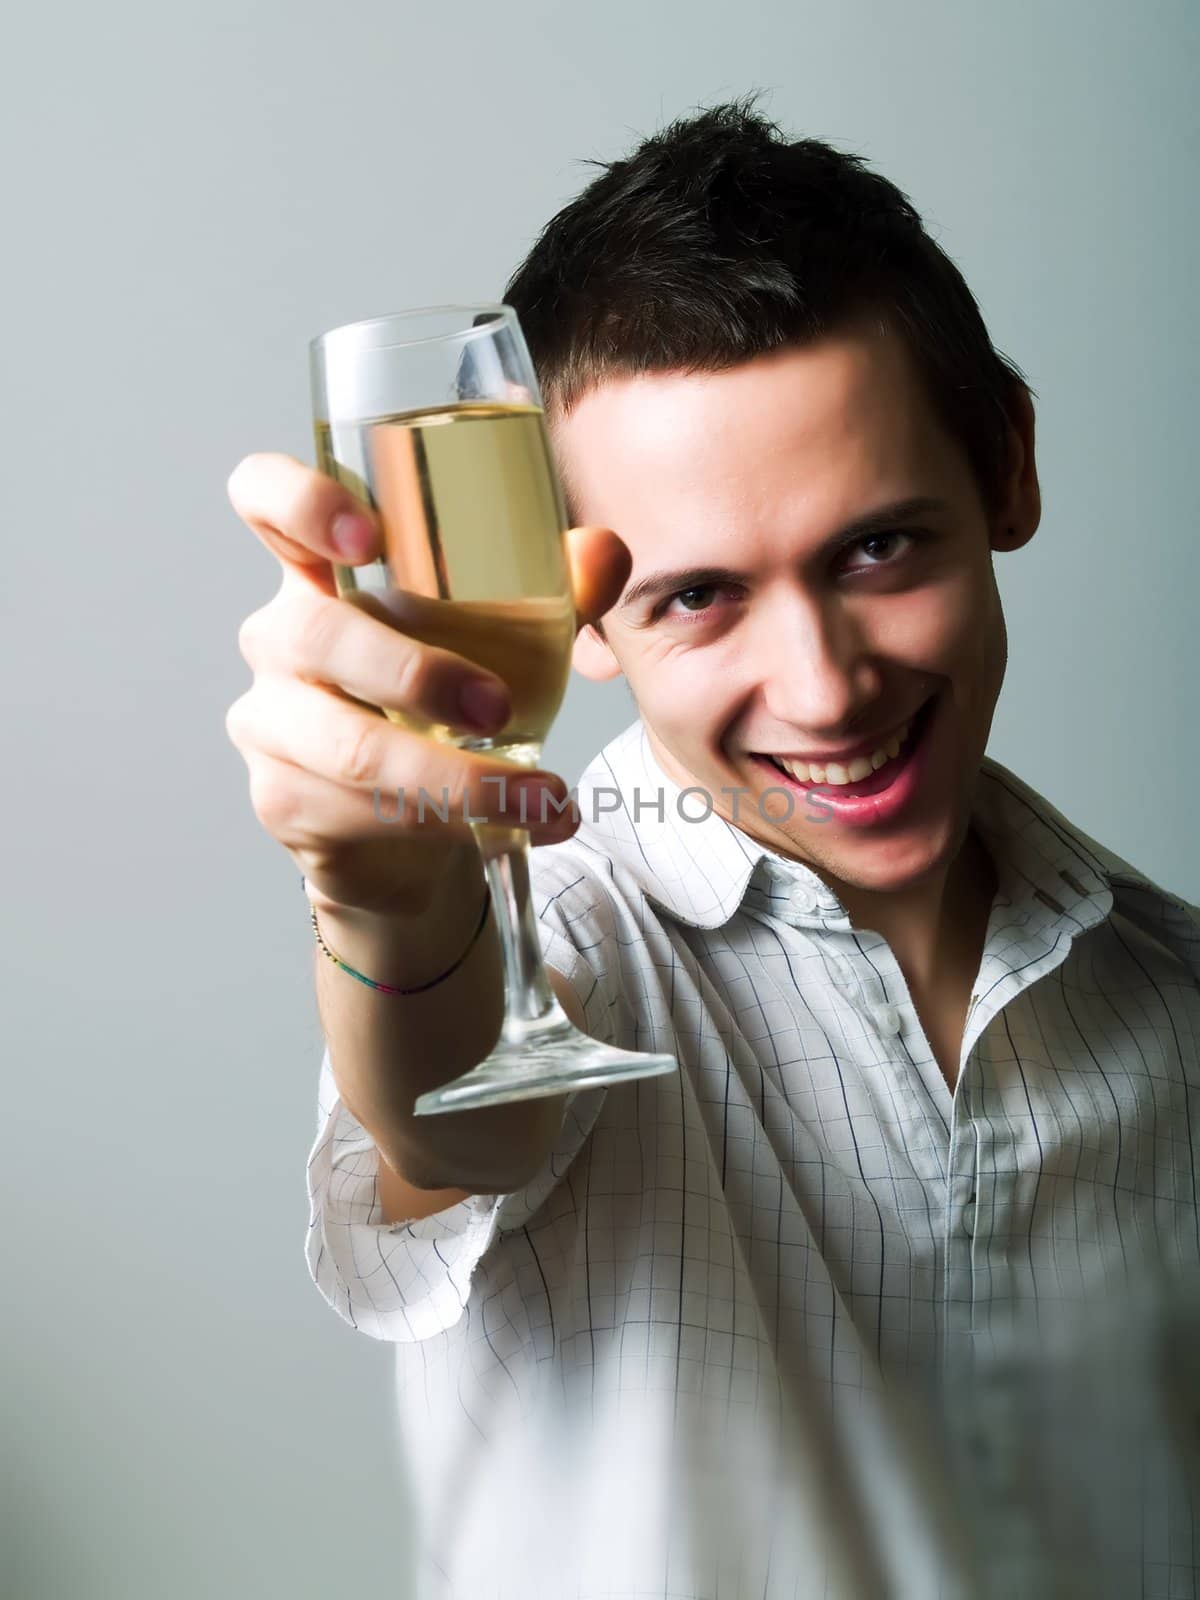 Drinking champaign by henrischmit